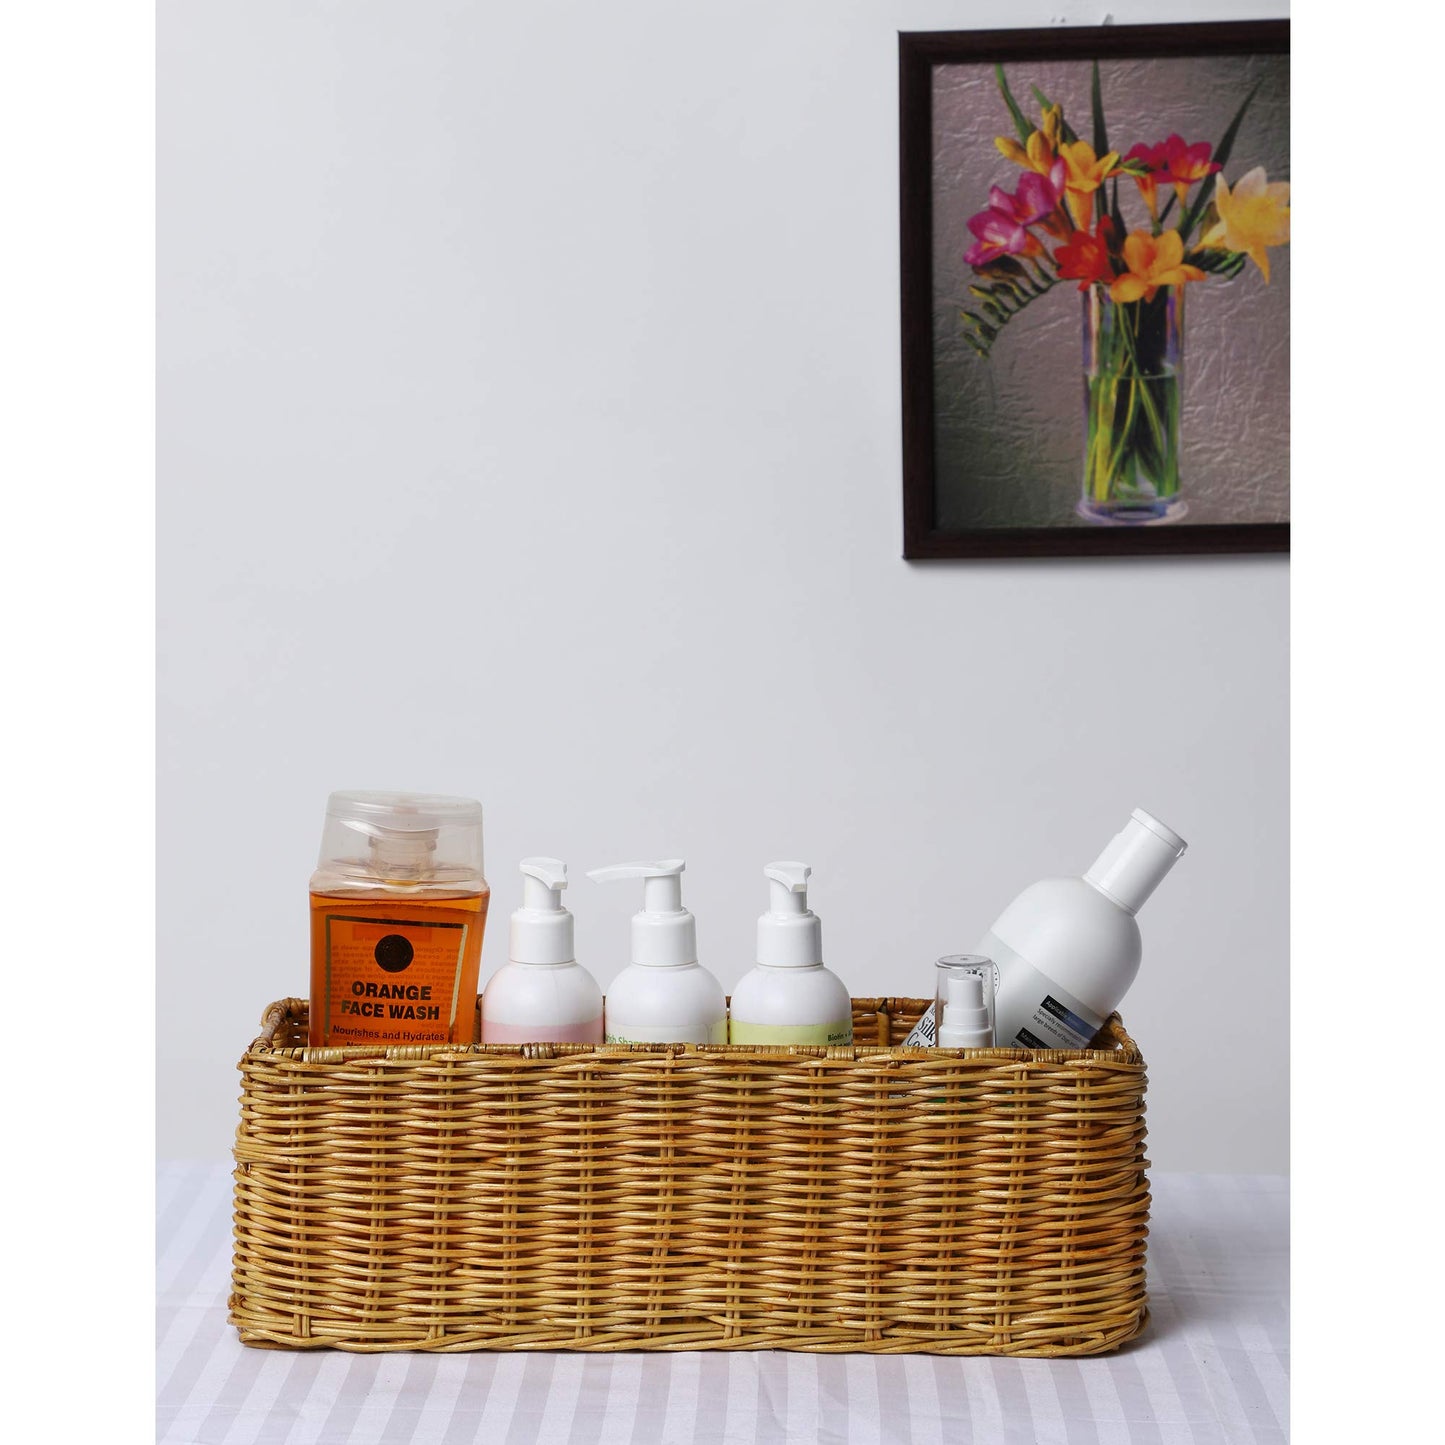 AKWAY Handmade Wicker Basket Bathroom Vanity Tray, Wicker Kitchen Counter top Storage Shelf Coffee Table Decorative Tray Cosmetic Organizer Display Holder (11 L x 4.5 W x 4.5 H) - Akway